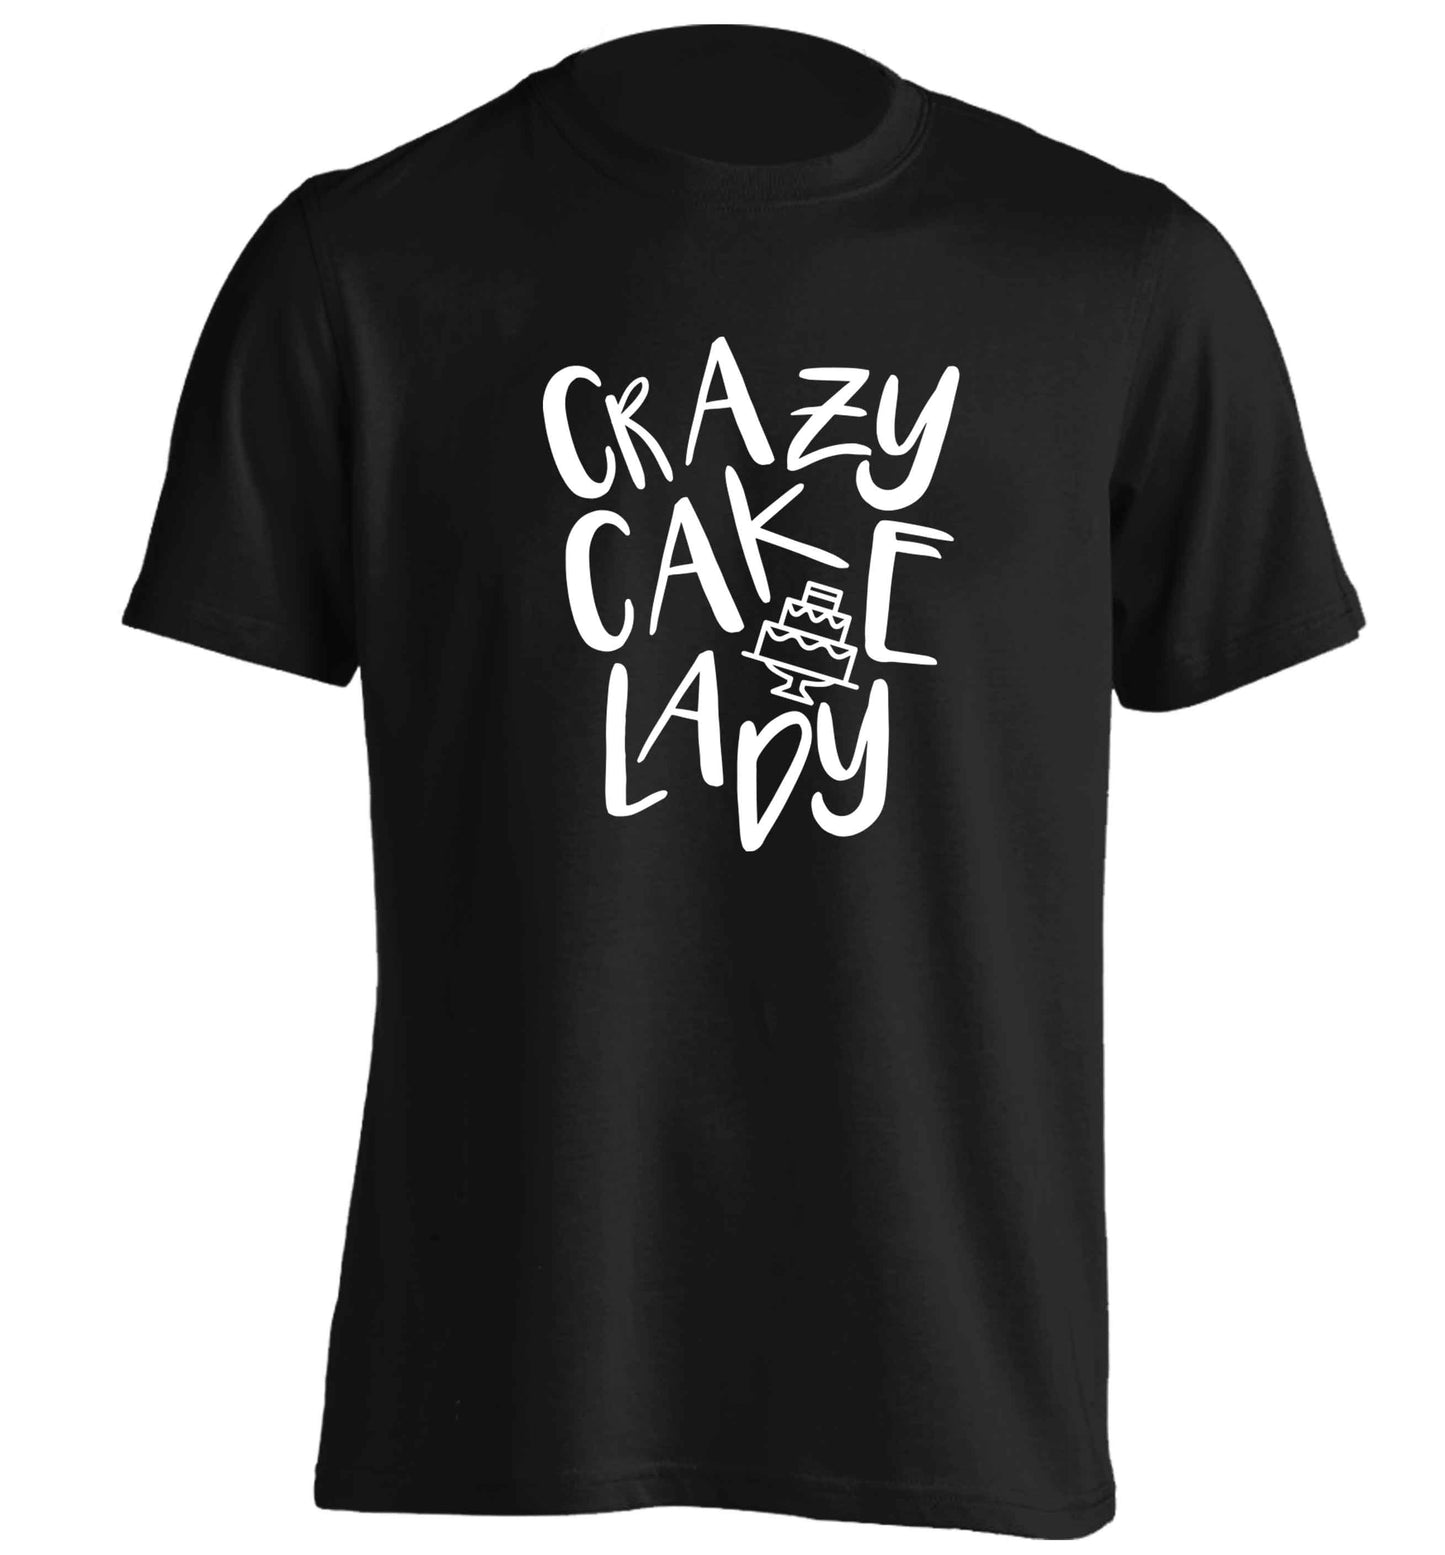 Crazy cake lady adults unisex black Tshirt 2XL